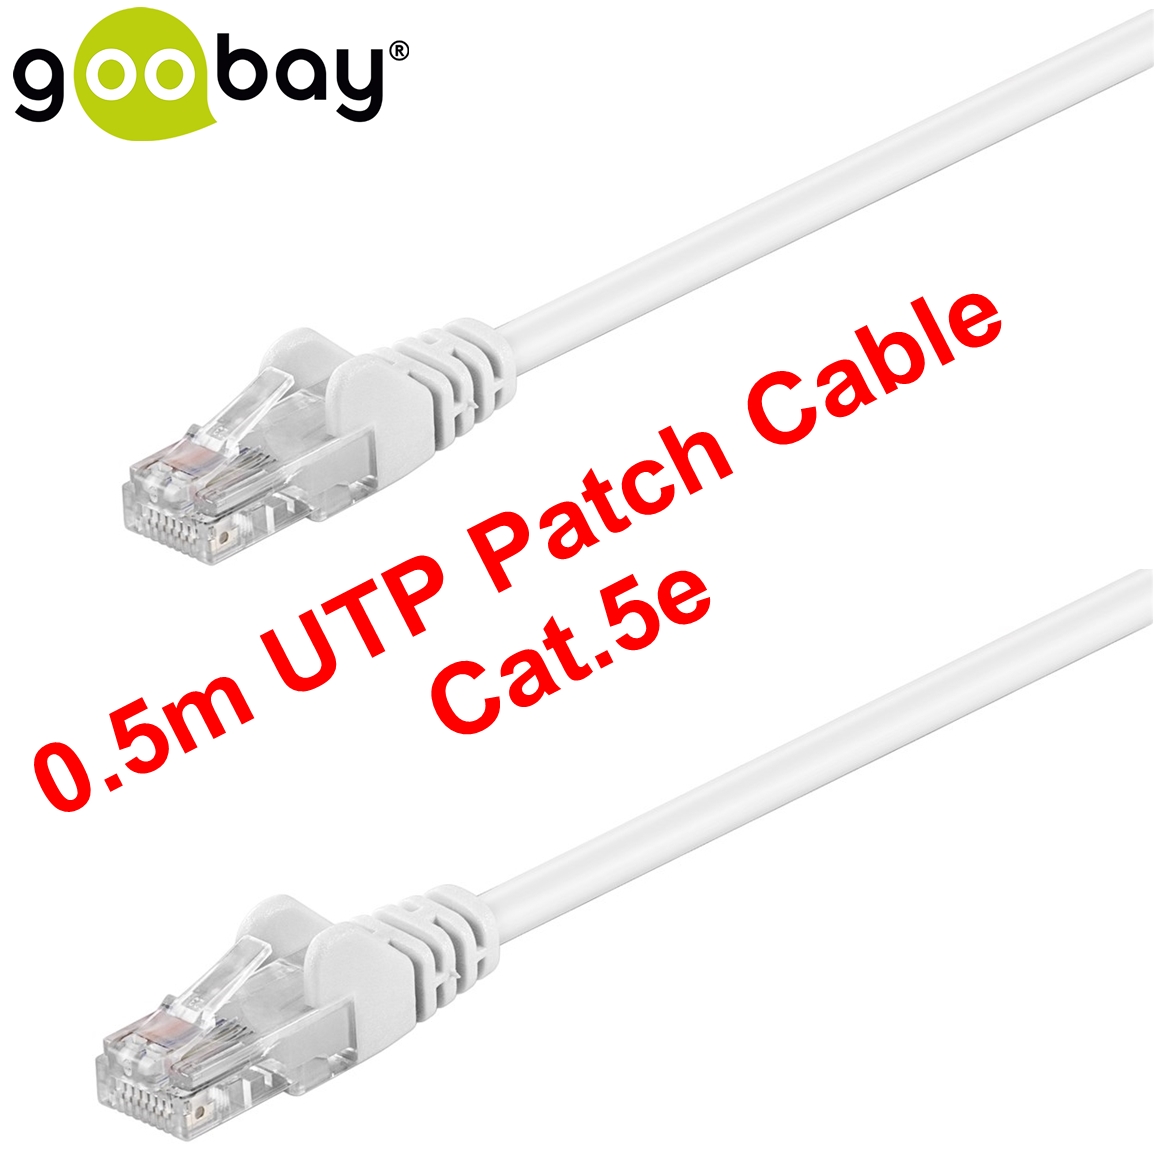 0.50m UTP Patch Cable Cat.5e GOOBAY (white)